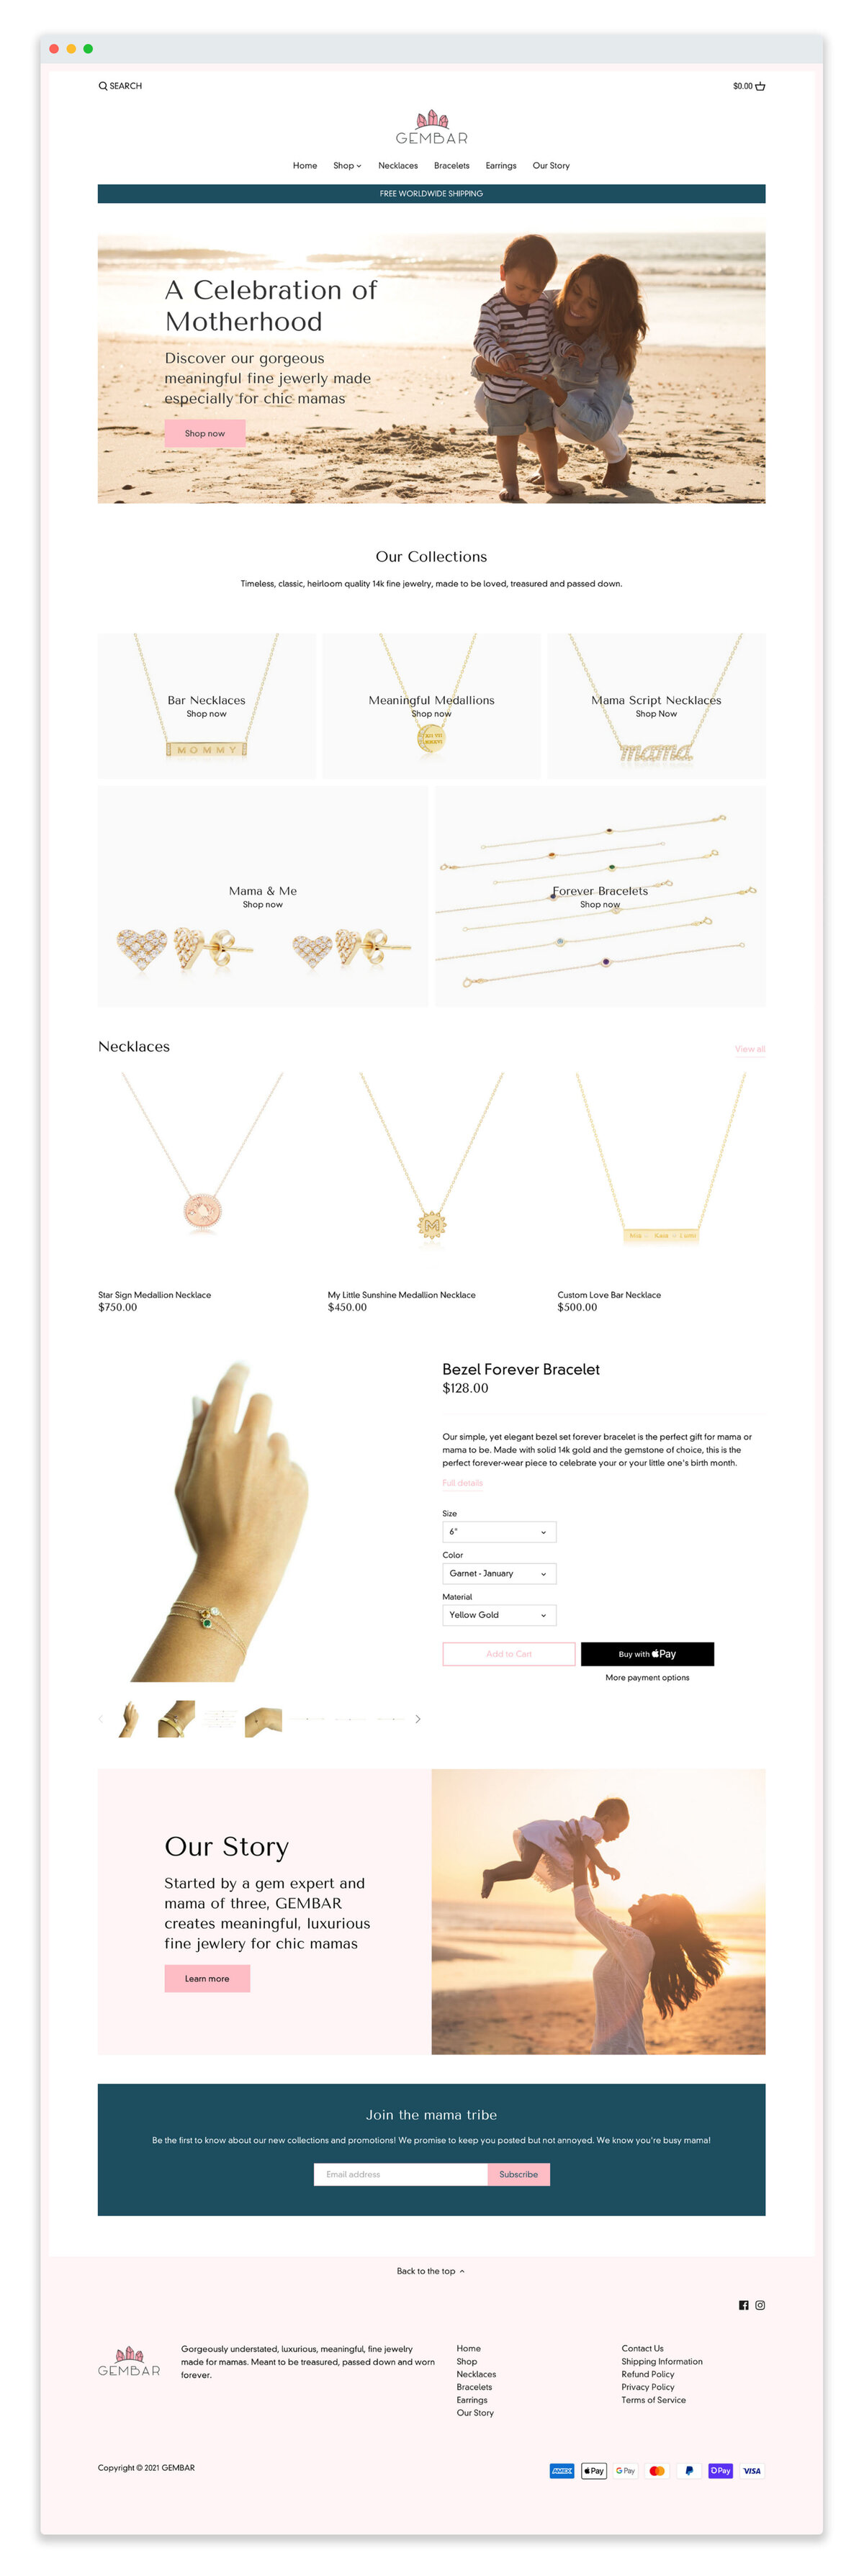 E-Commerce Web Design Service for Luxury Bespoke Jewelry Brand, GEMBAR by Website Designer in Hong Kong, Kyra Janelle - Desktop Homepage.